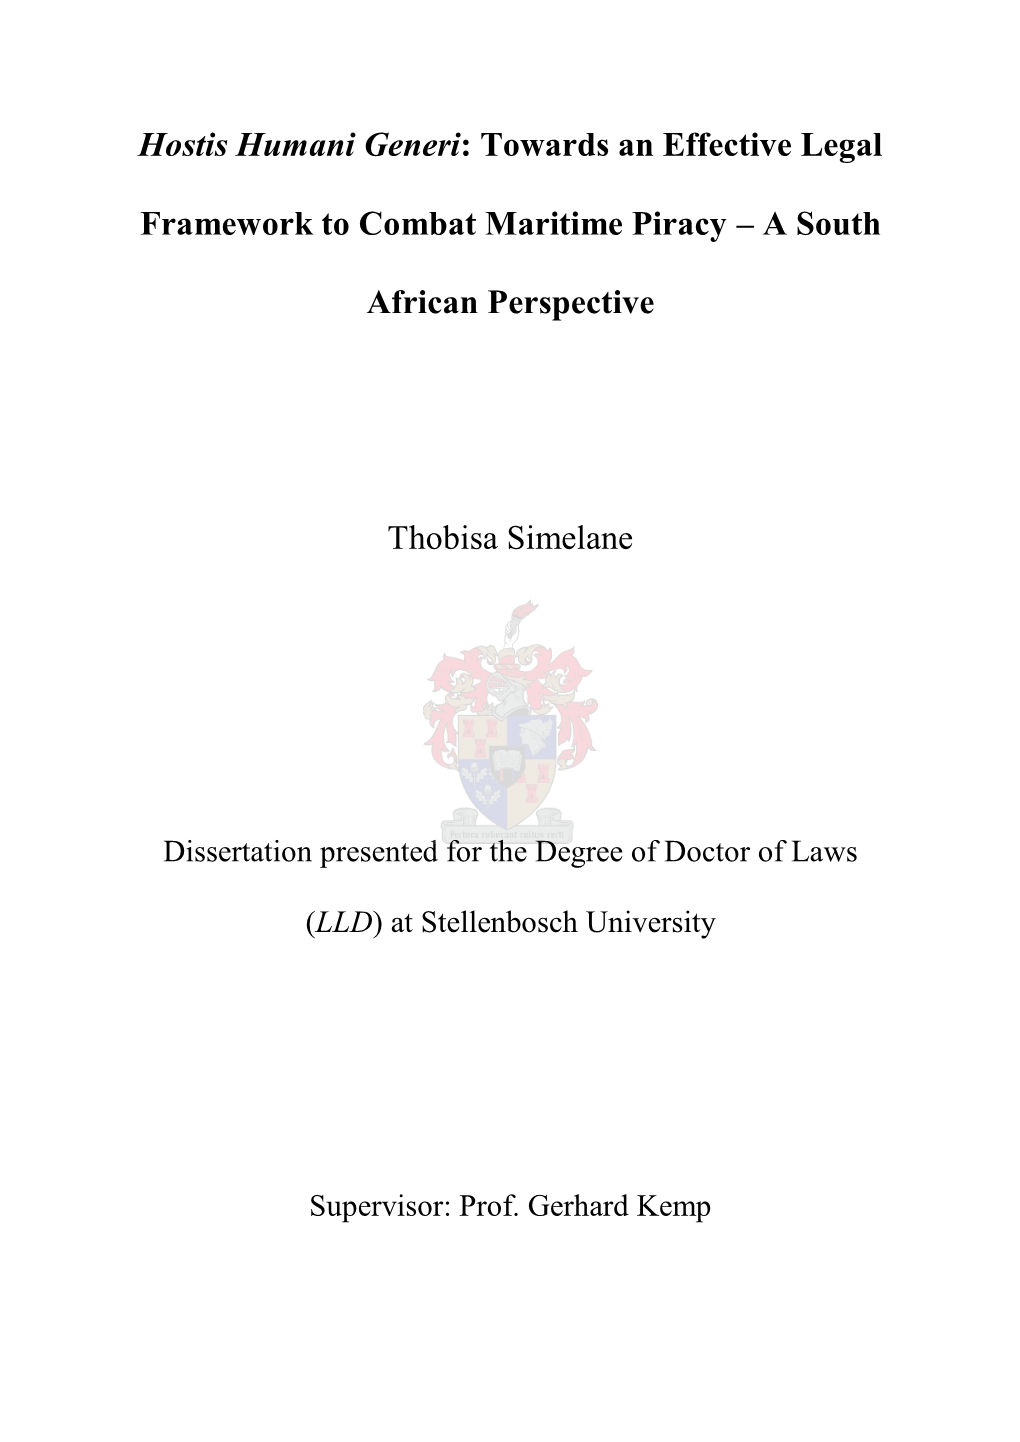 Towards an Effective Legal Framework to Combat Maritime Piracy